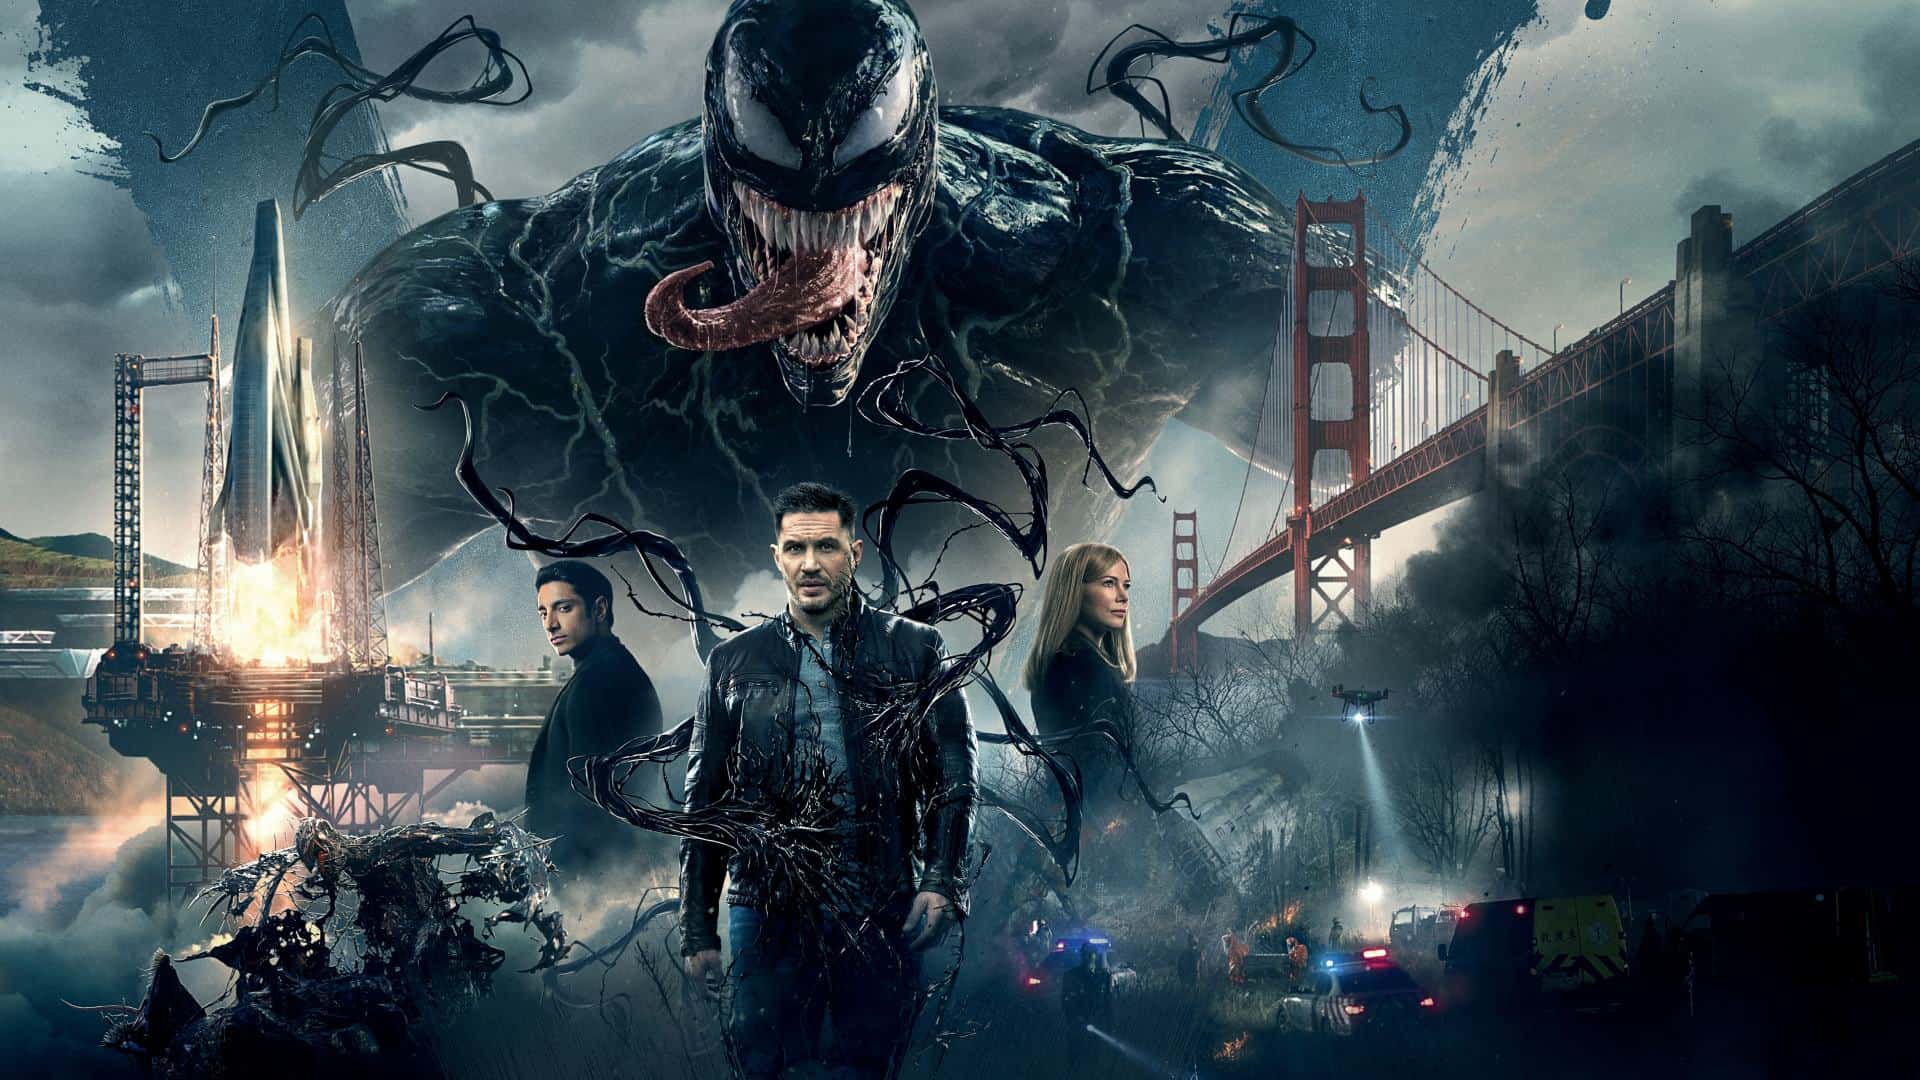 Venom (2018) 1080p Bluray Hindi Dubbed